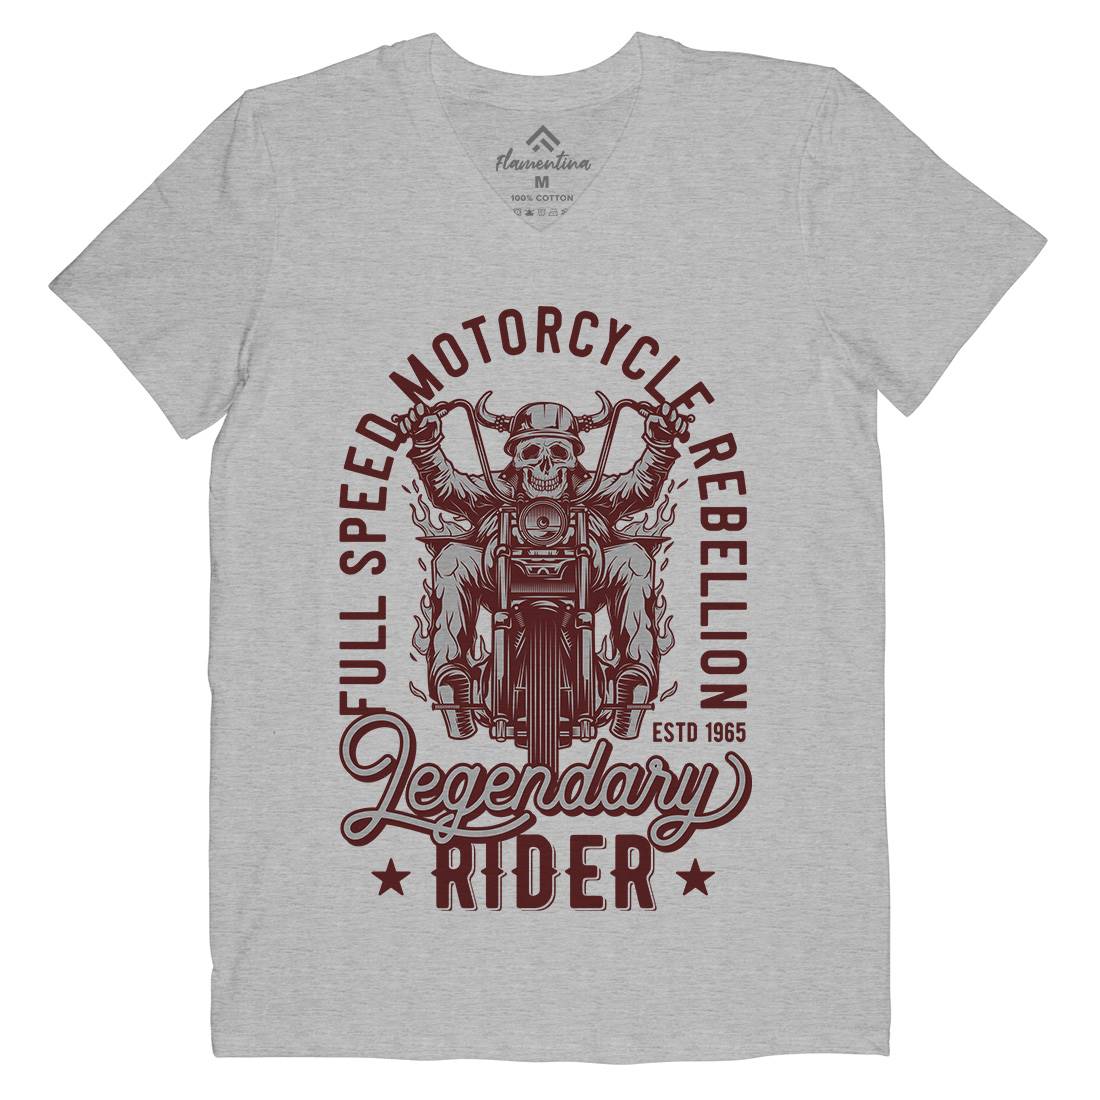 Legendary Mens V-Neck T-Shirt Motorcycles B856